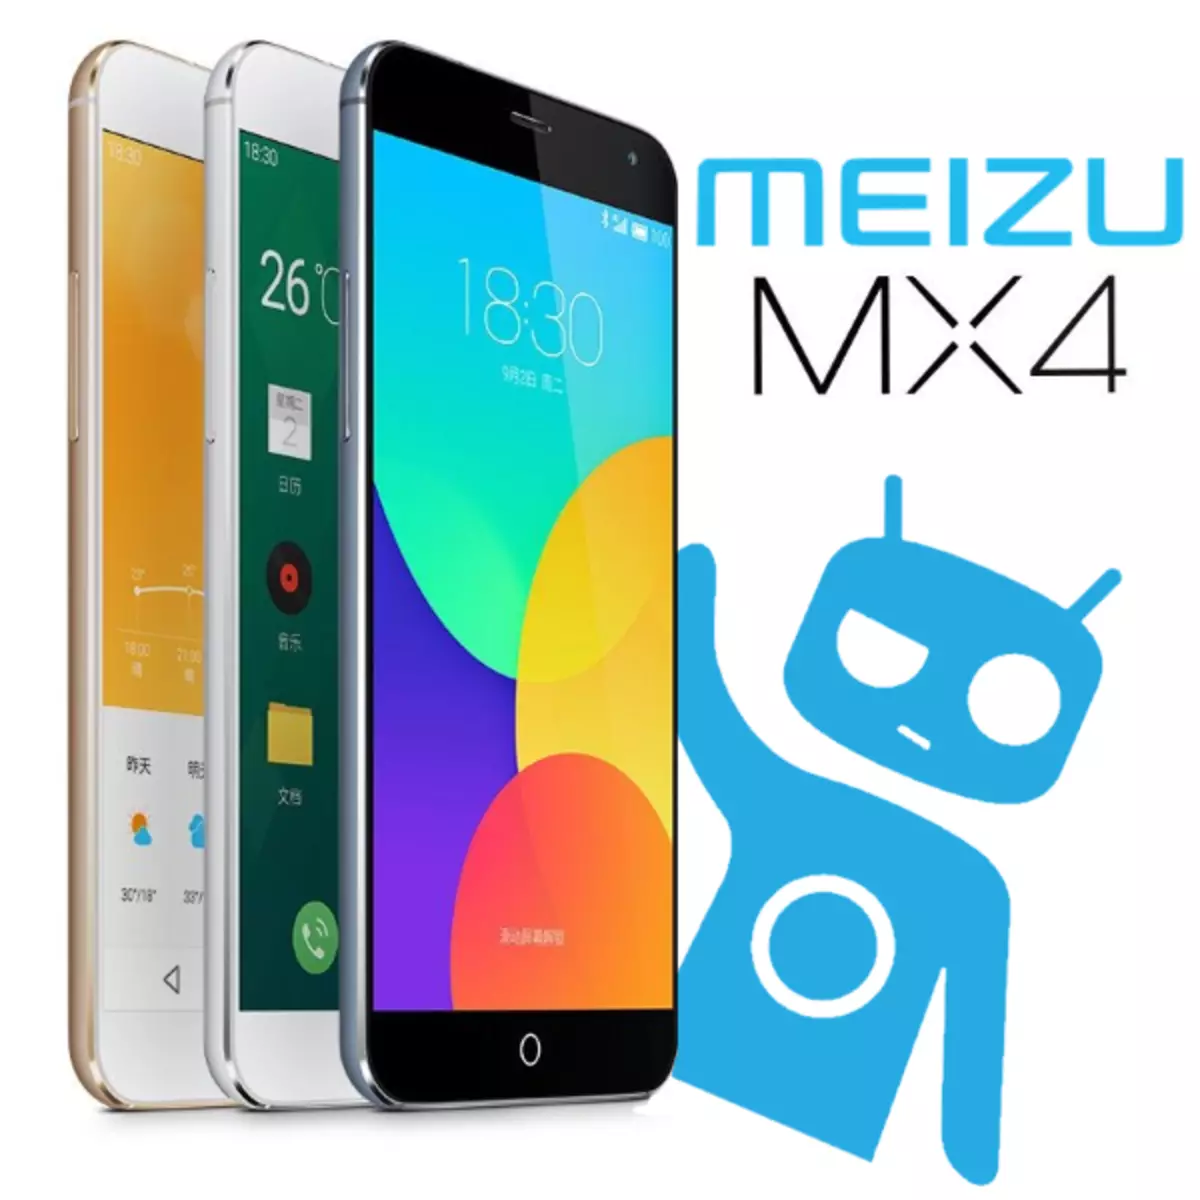 Микробағдарлама MEIZU MX4.